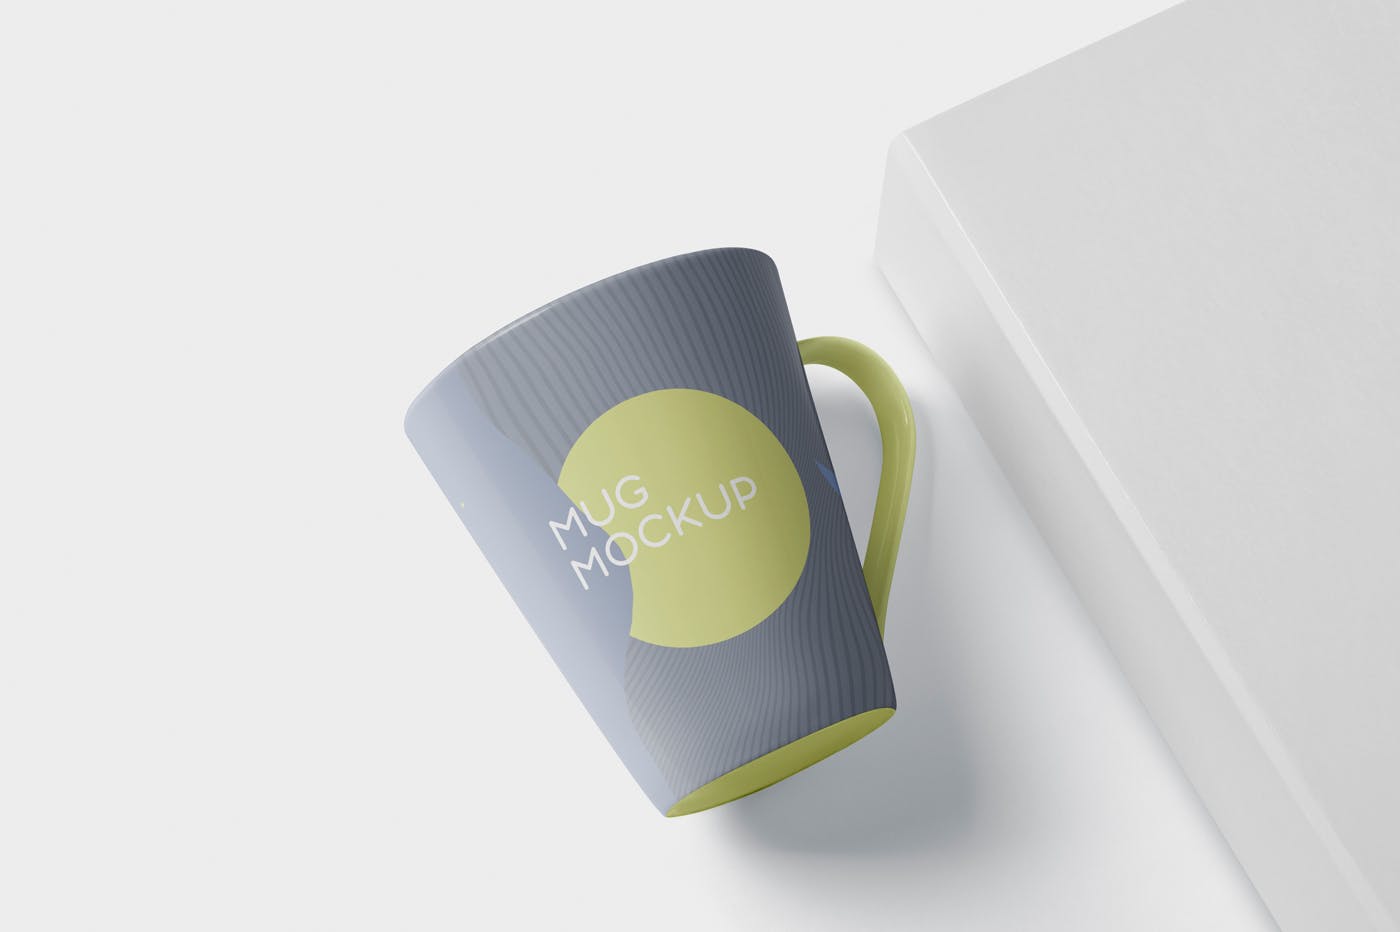 锥形马克杯图案设计16设计网精选 Mug Mockup – Cone Shaped插图(4)